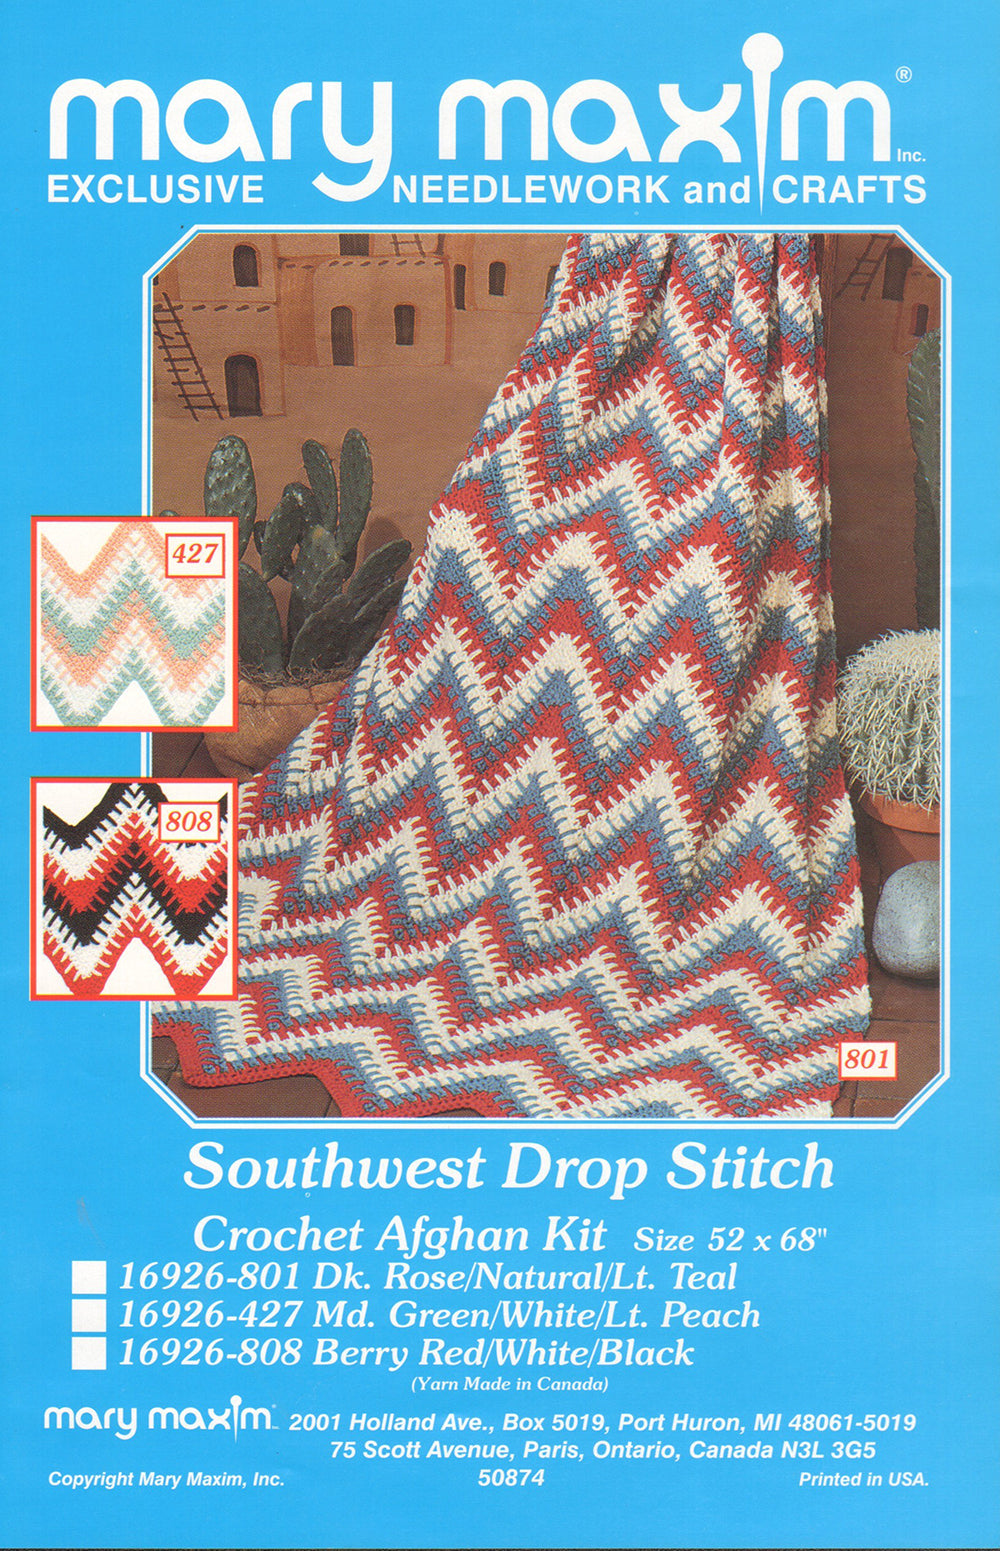 Drop Stitch Afghan Pattern